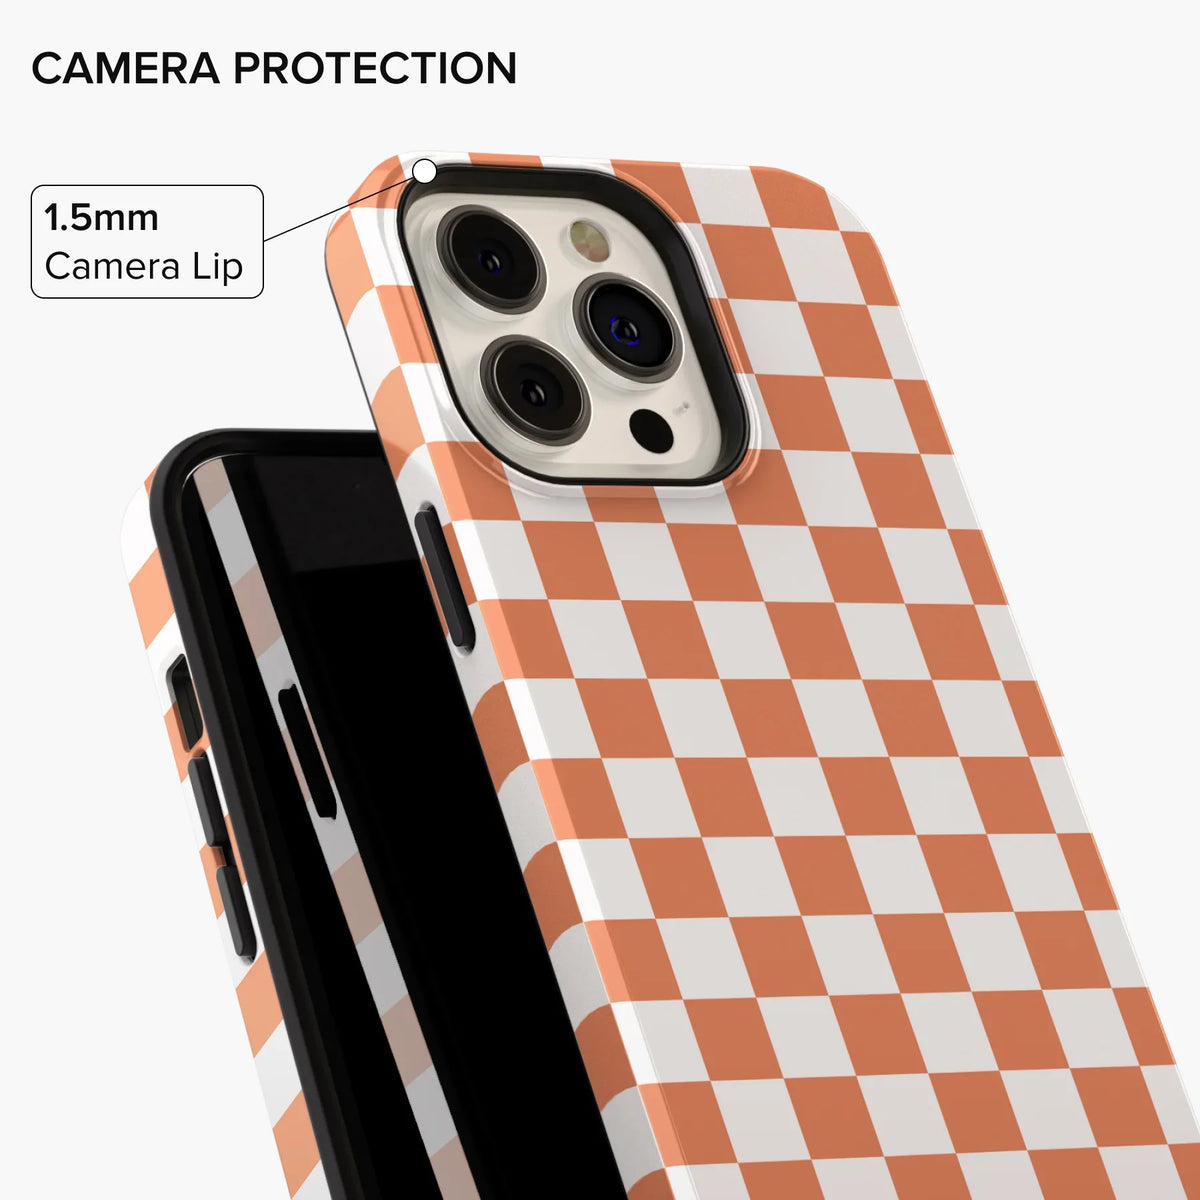 Peach Checkerboard iPhone Case - iPhone 12 Mini Cases